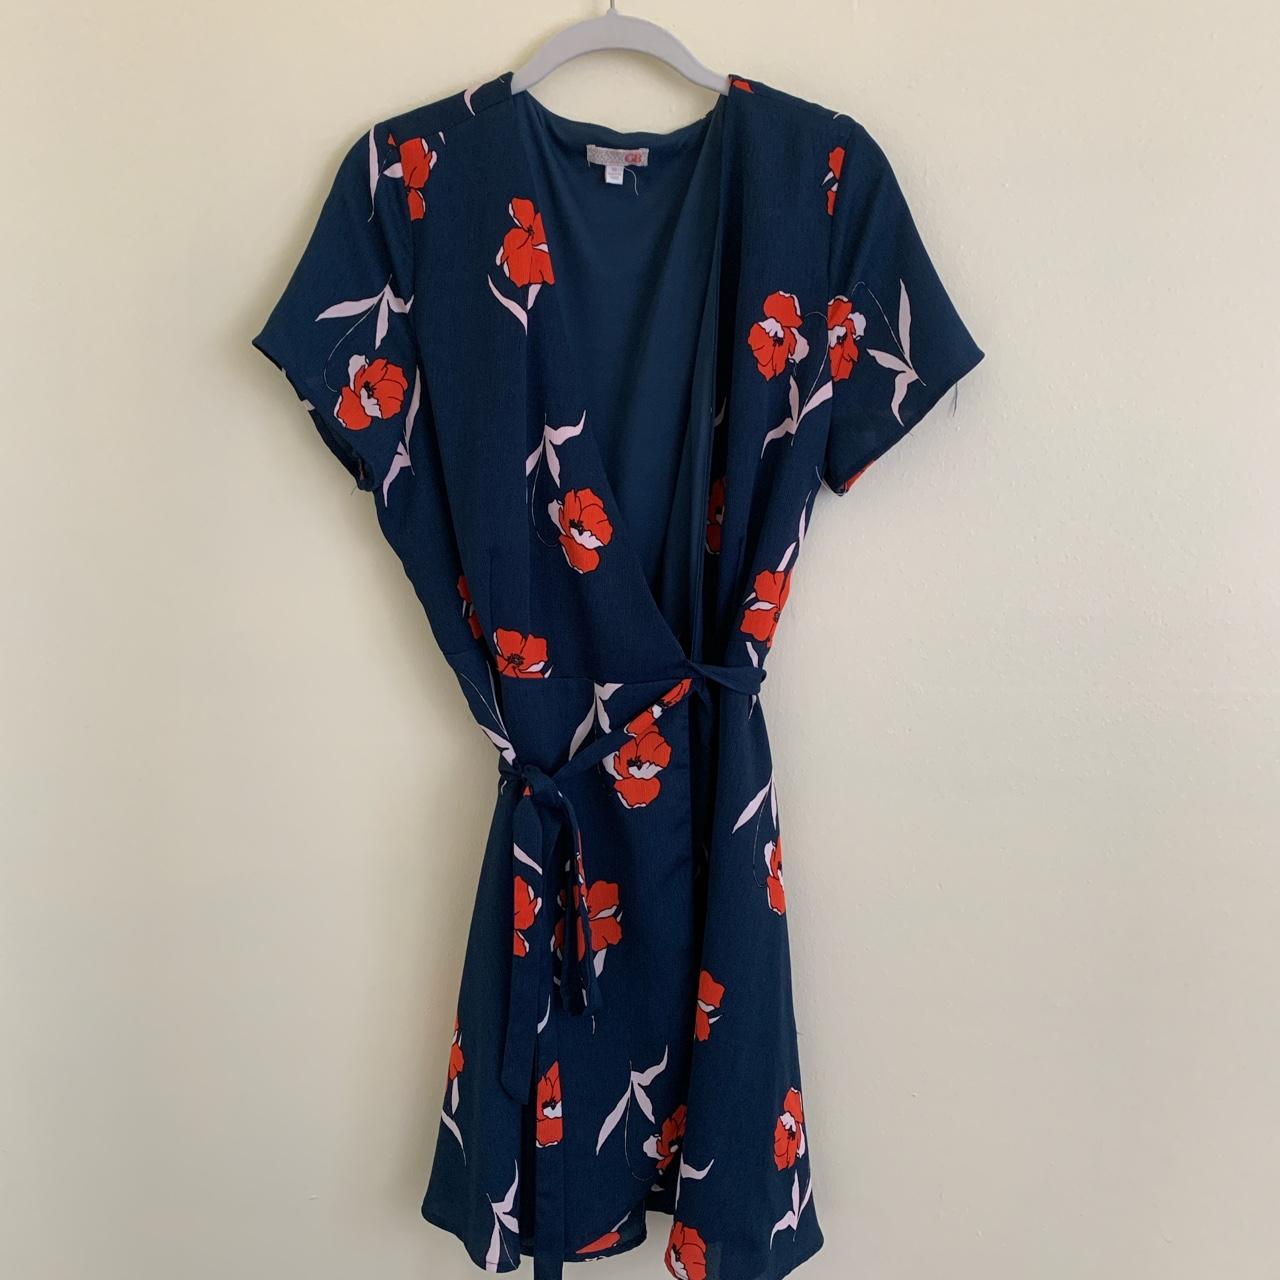 Women's Orange and Blue Dress | Depop